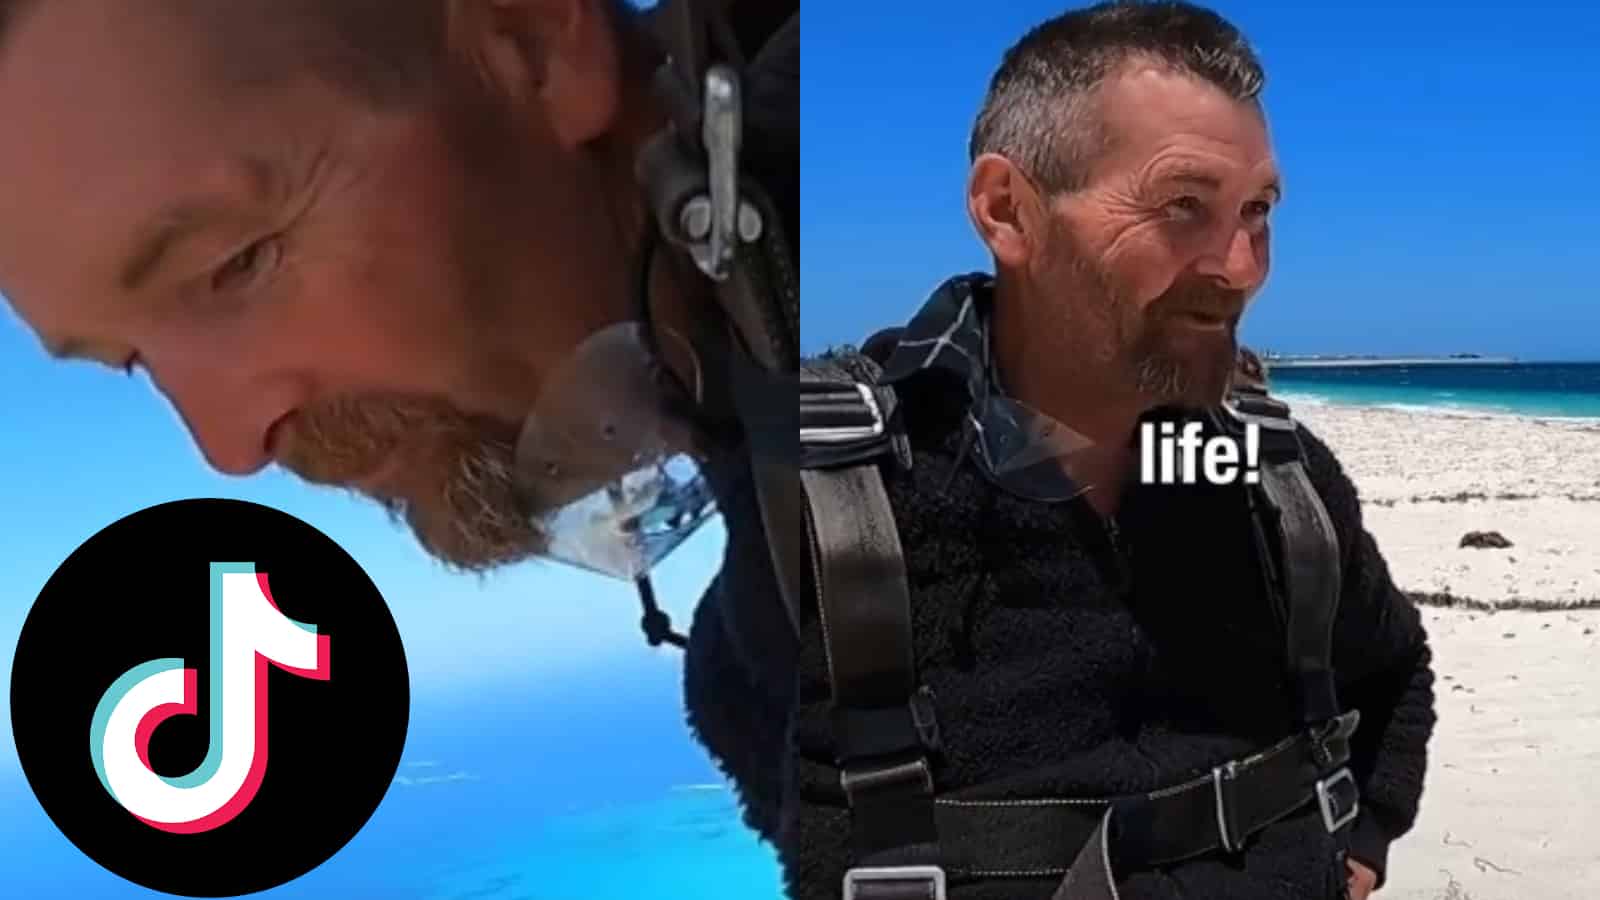 Tiktokers take homeless man skydiving